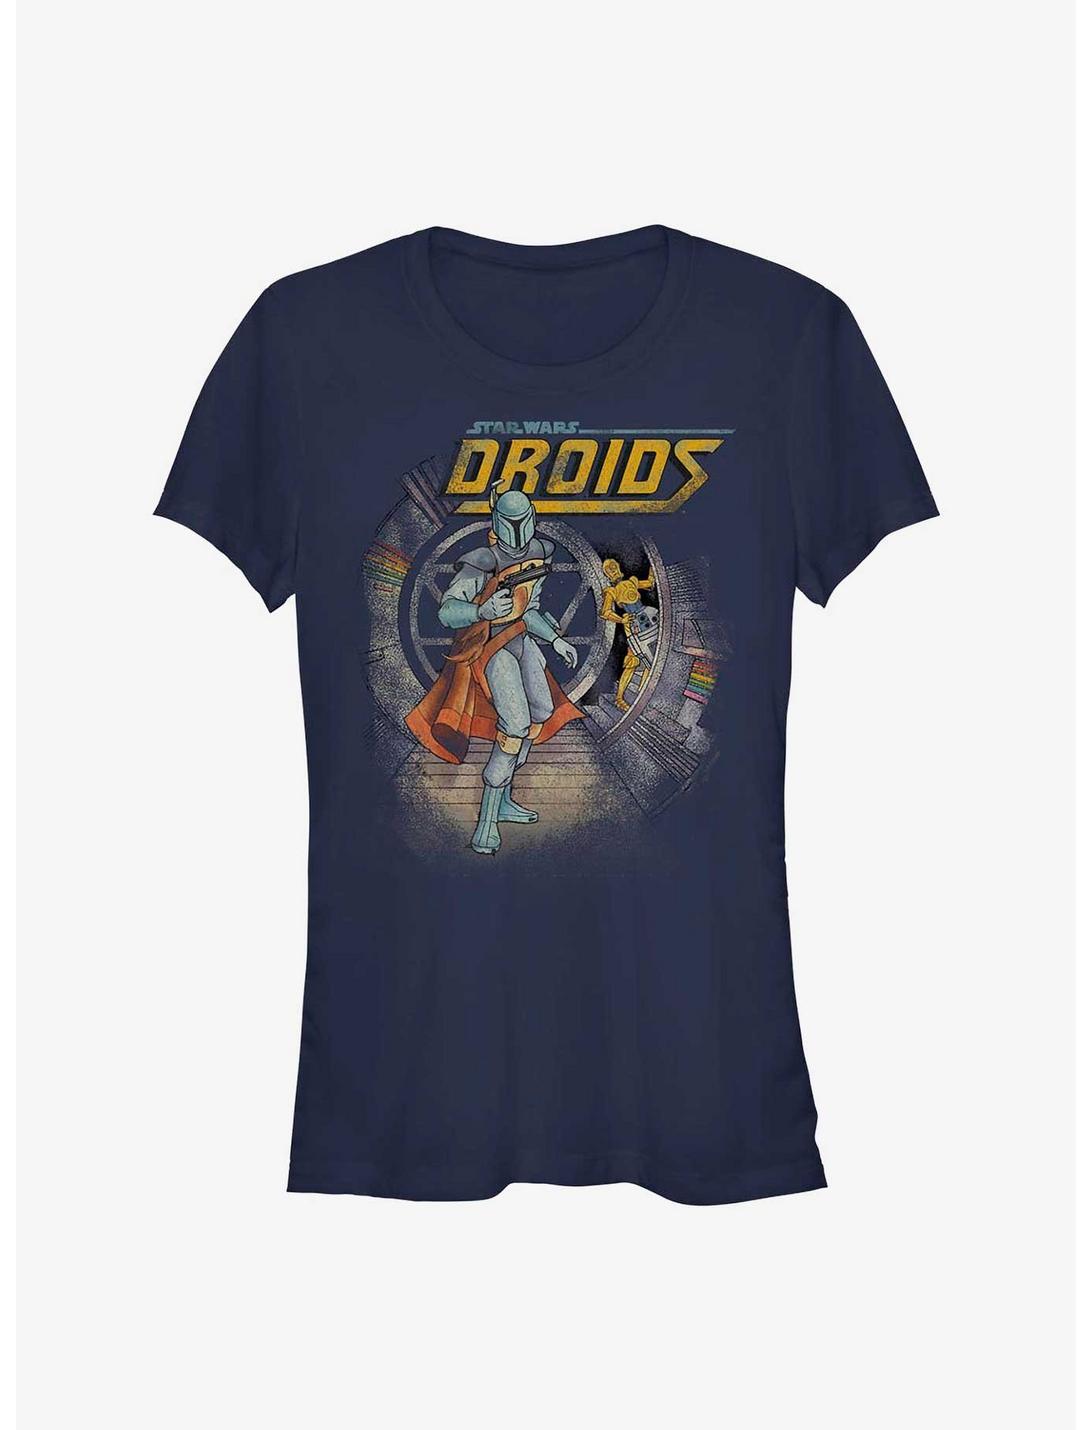 Star Wars Boba Fett Droids Girl's T-Shirt, NAVY, hi-res